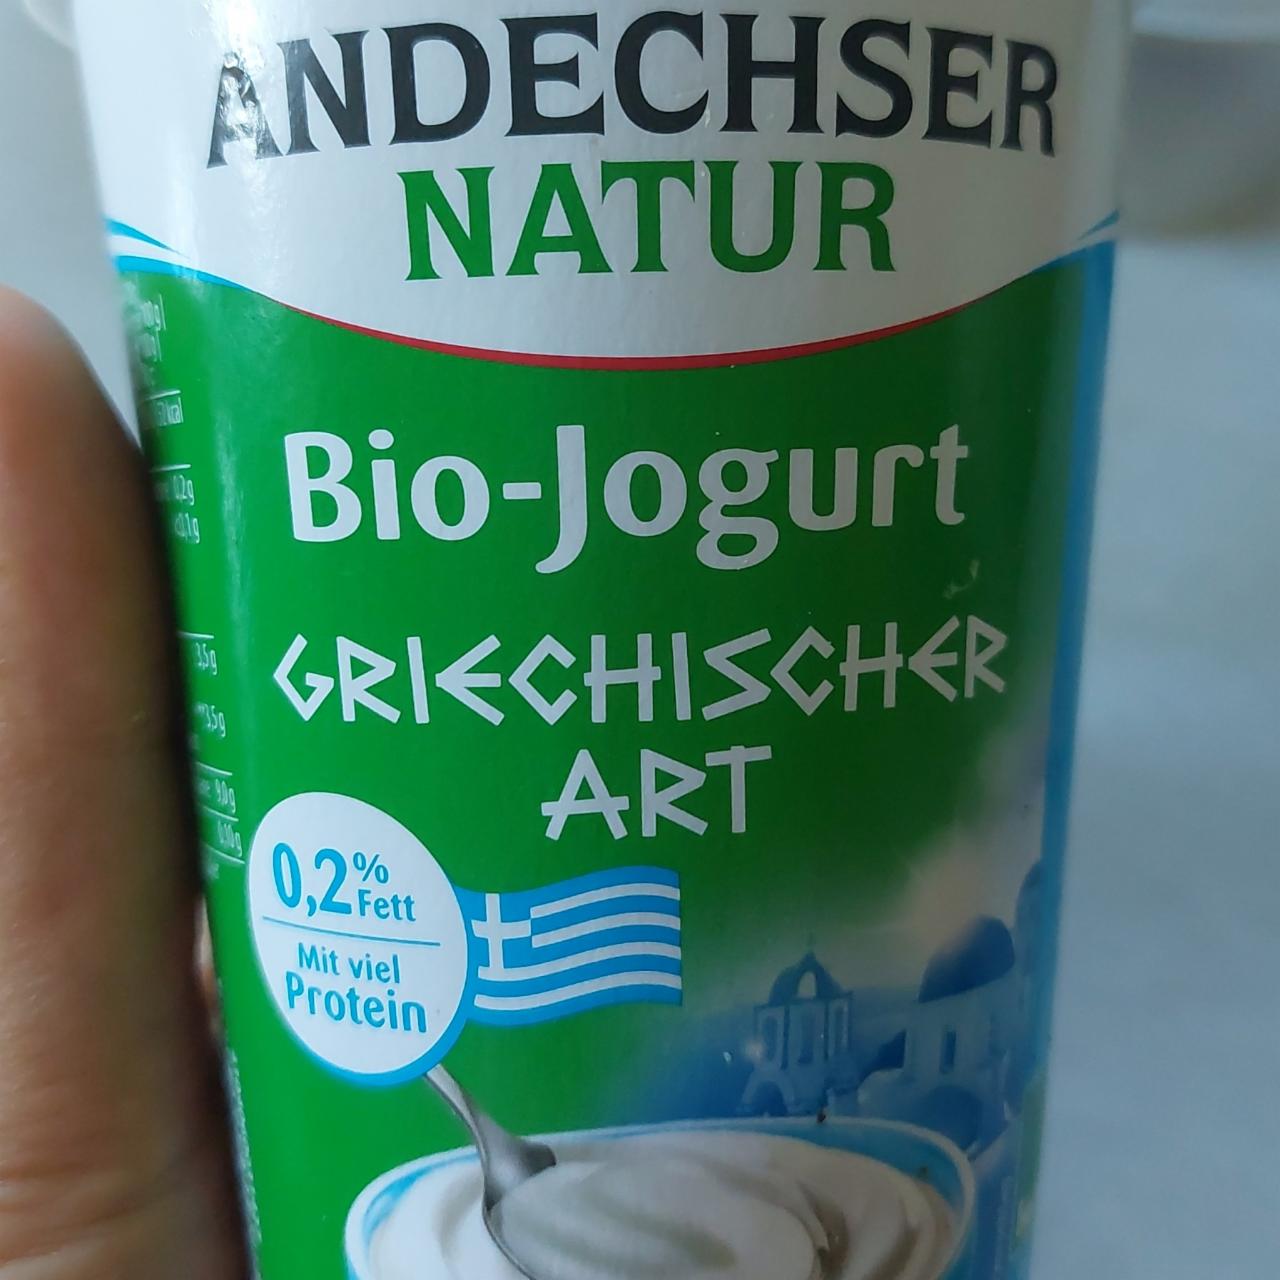 Fotografie - Bio jogurt griechischer Art 0.2% Fett Andechser natur